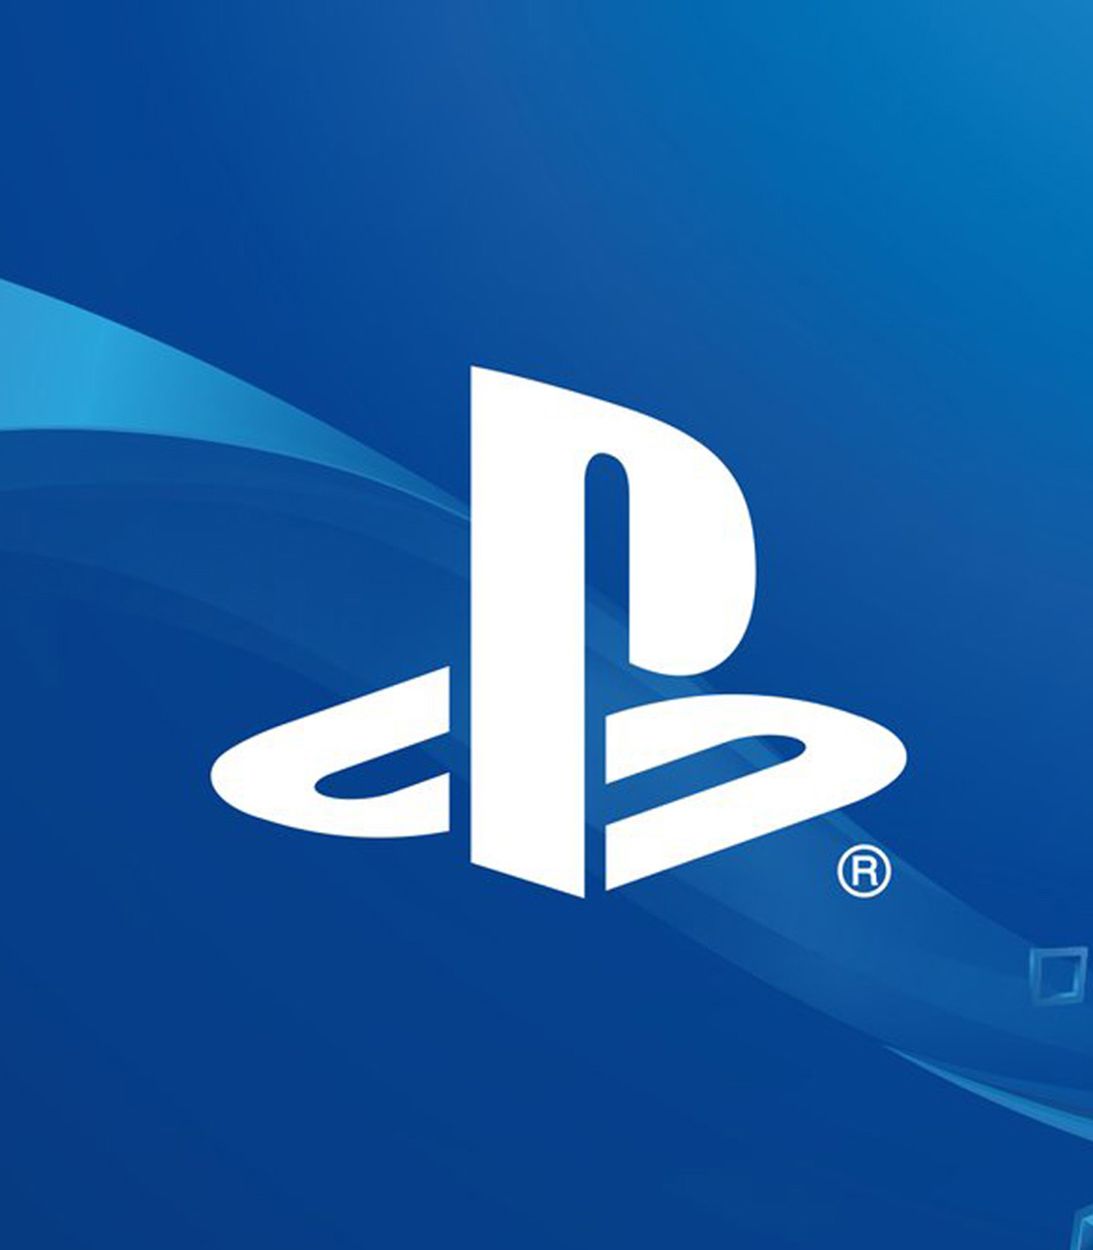 PS4 Logo - Vertical